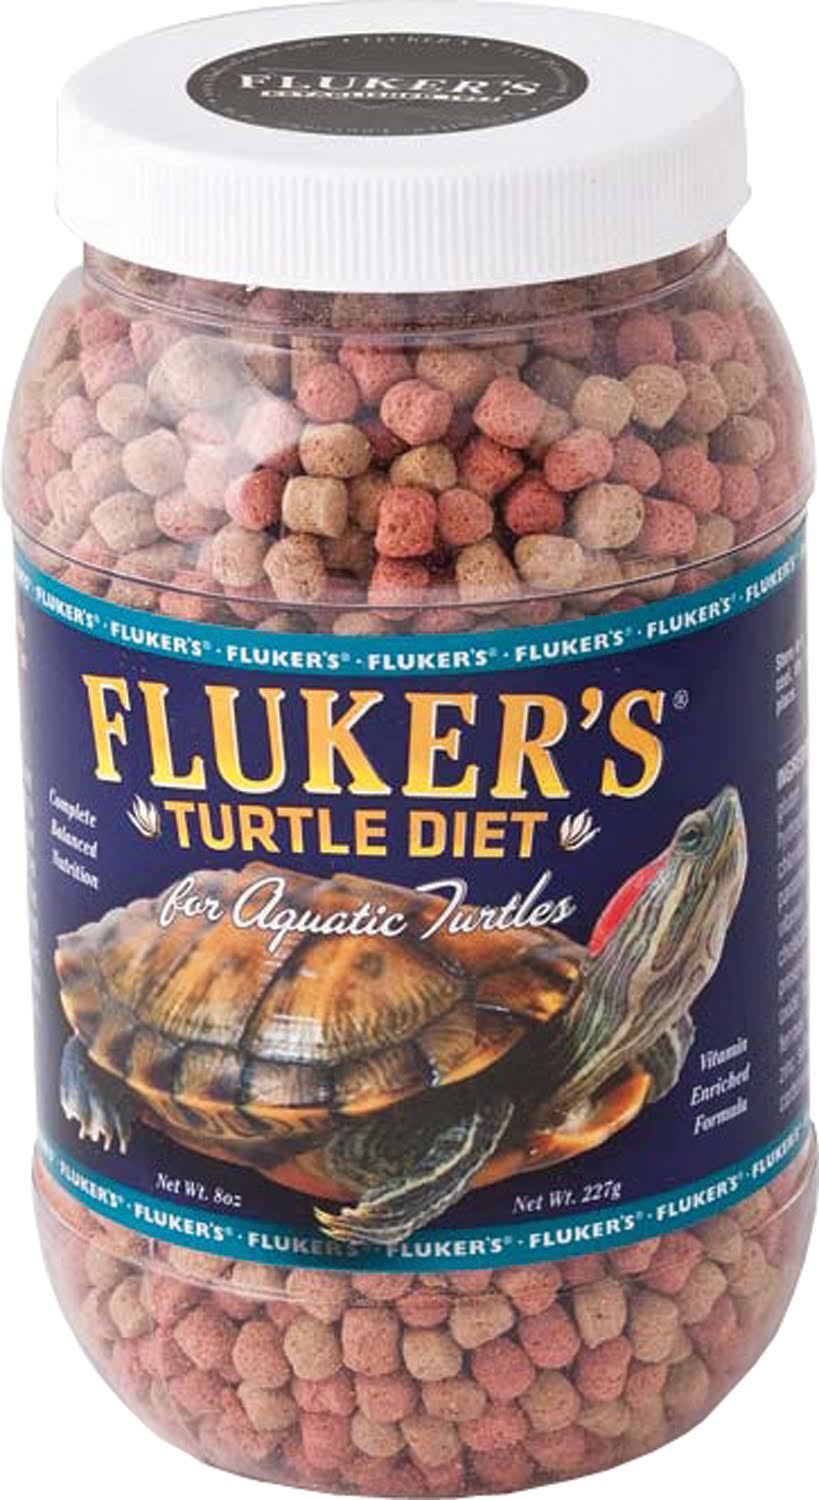 Fluker's Aquatic Turtle Diet - 8oz